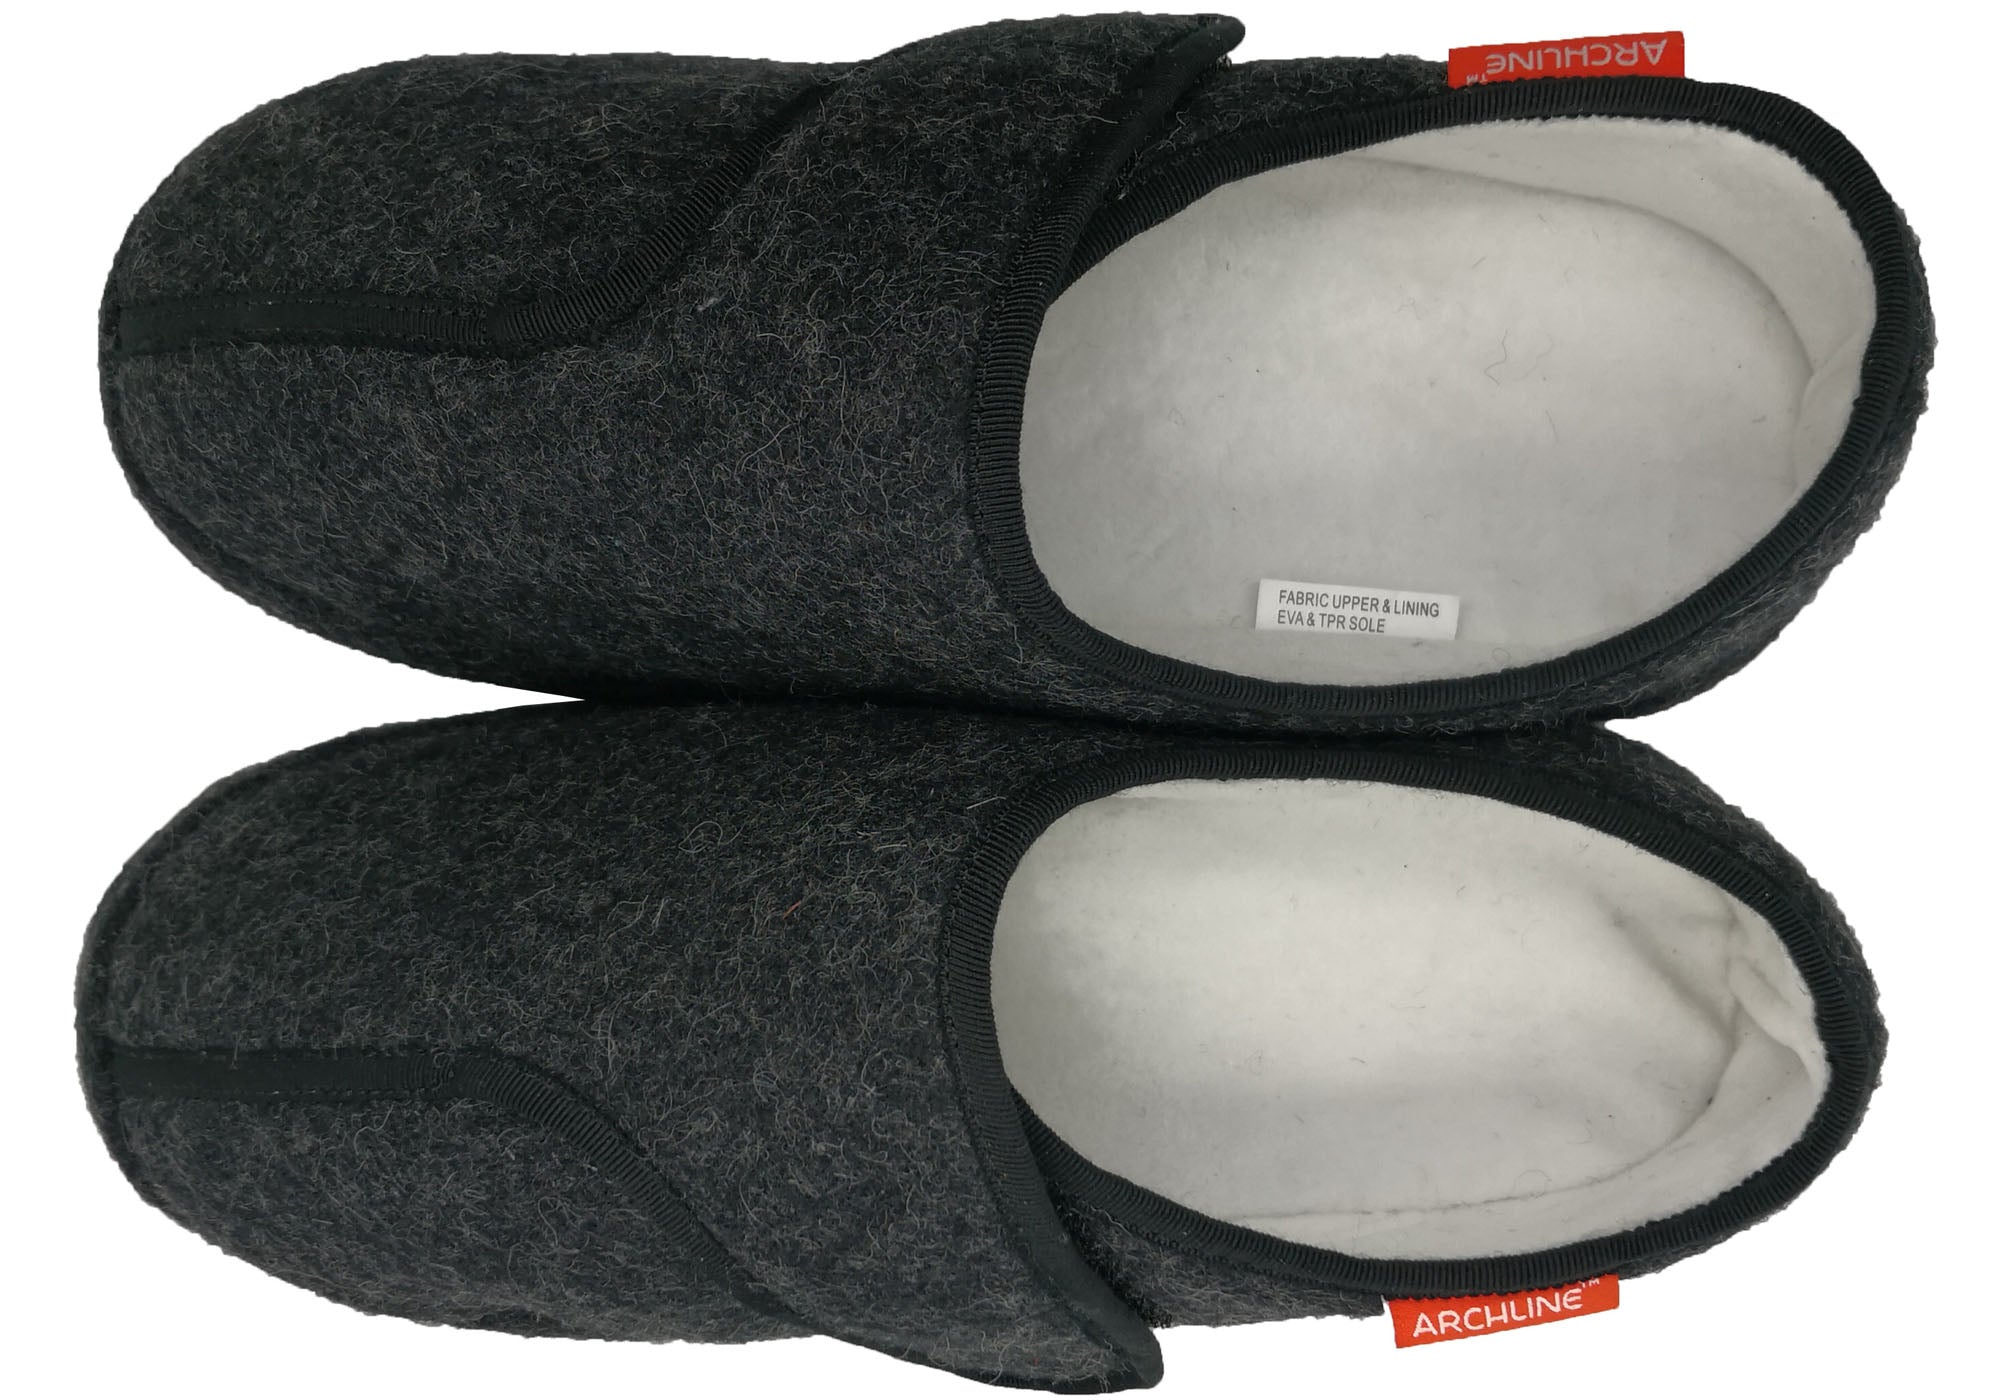 orthopaedic slippers australia